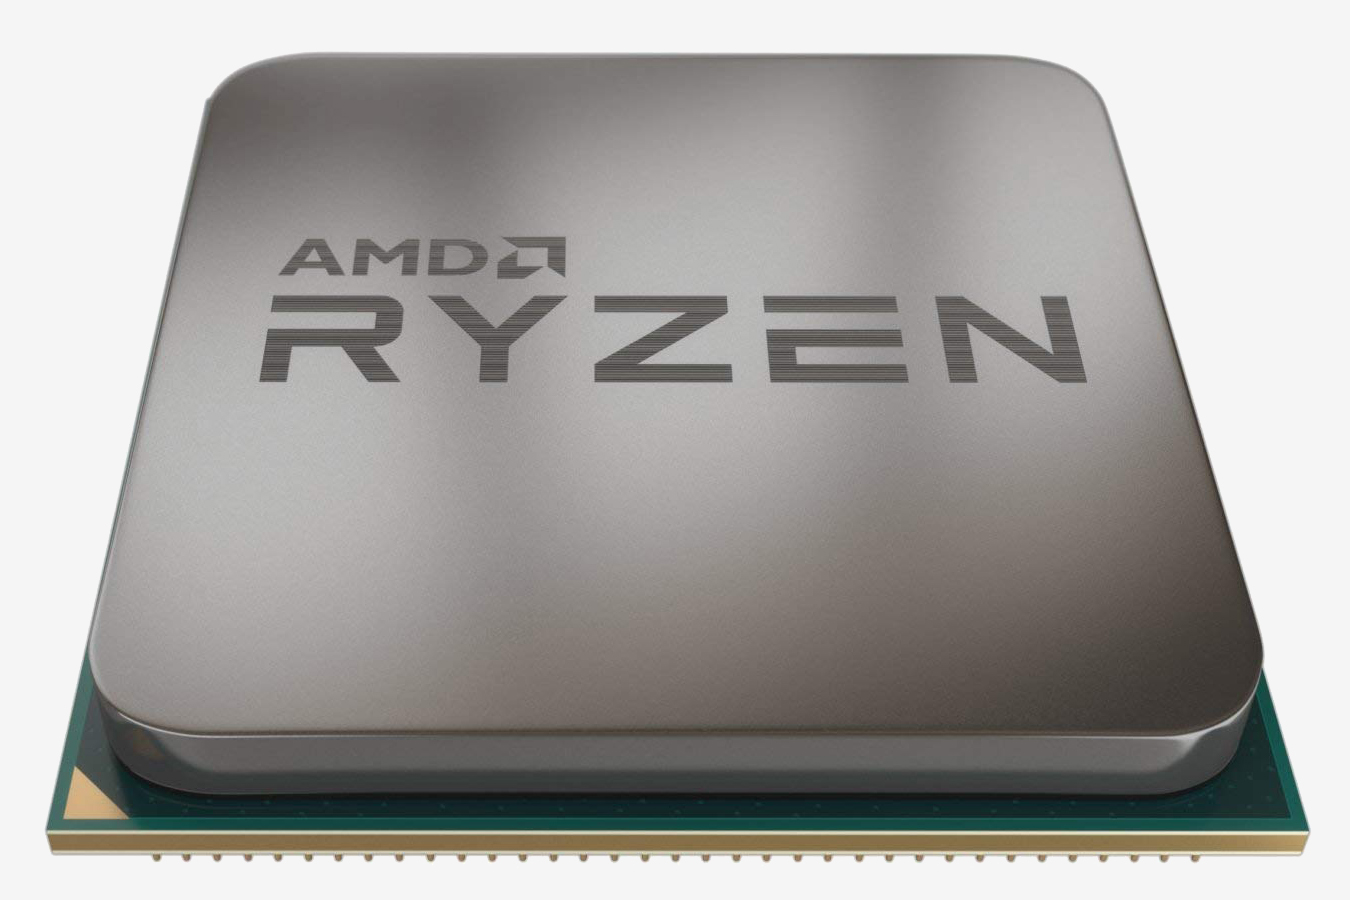 AMD Ryzen 7 2700 with Spire cooler